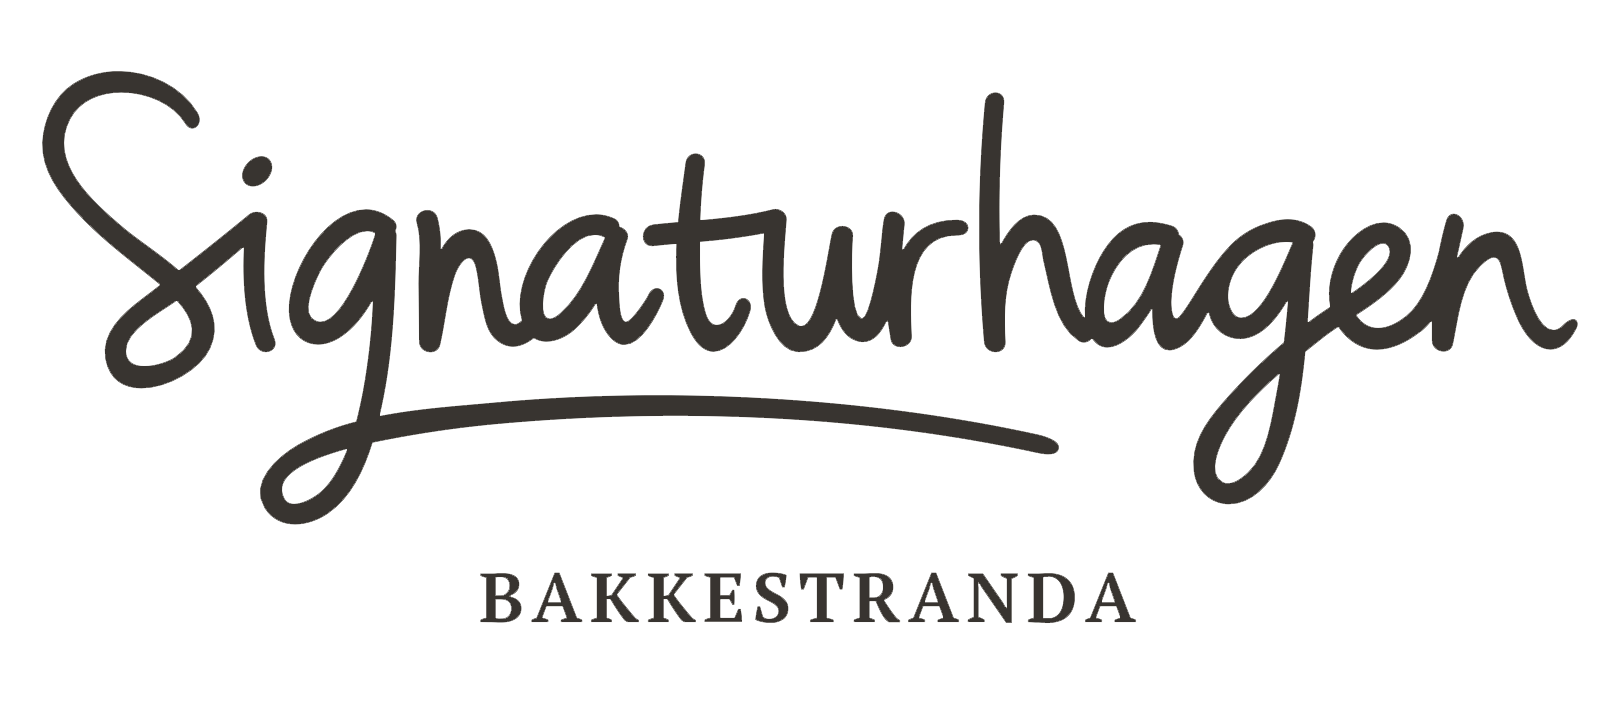 The logo of the feed named Signaturhagen Bakkestranda.